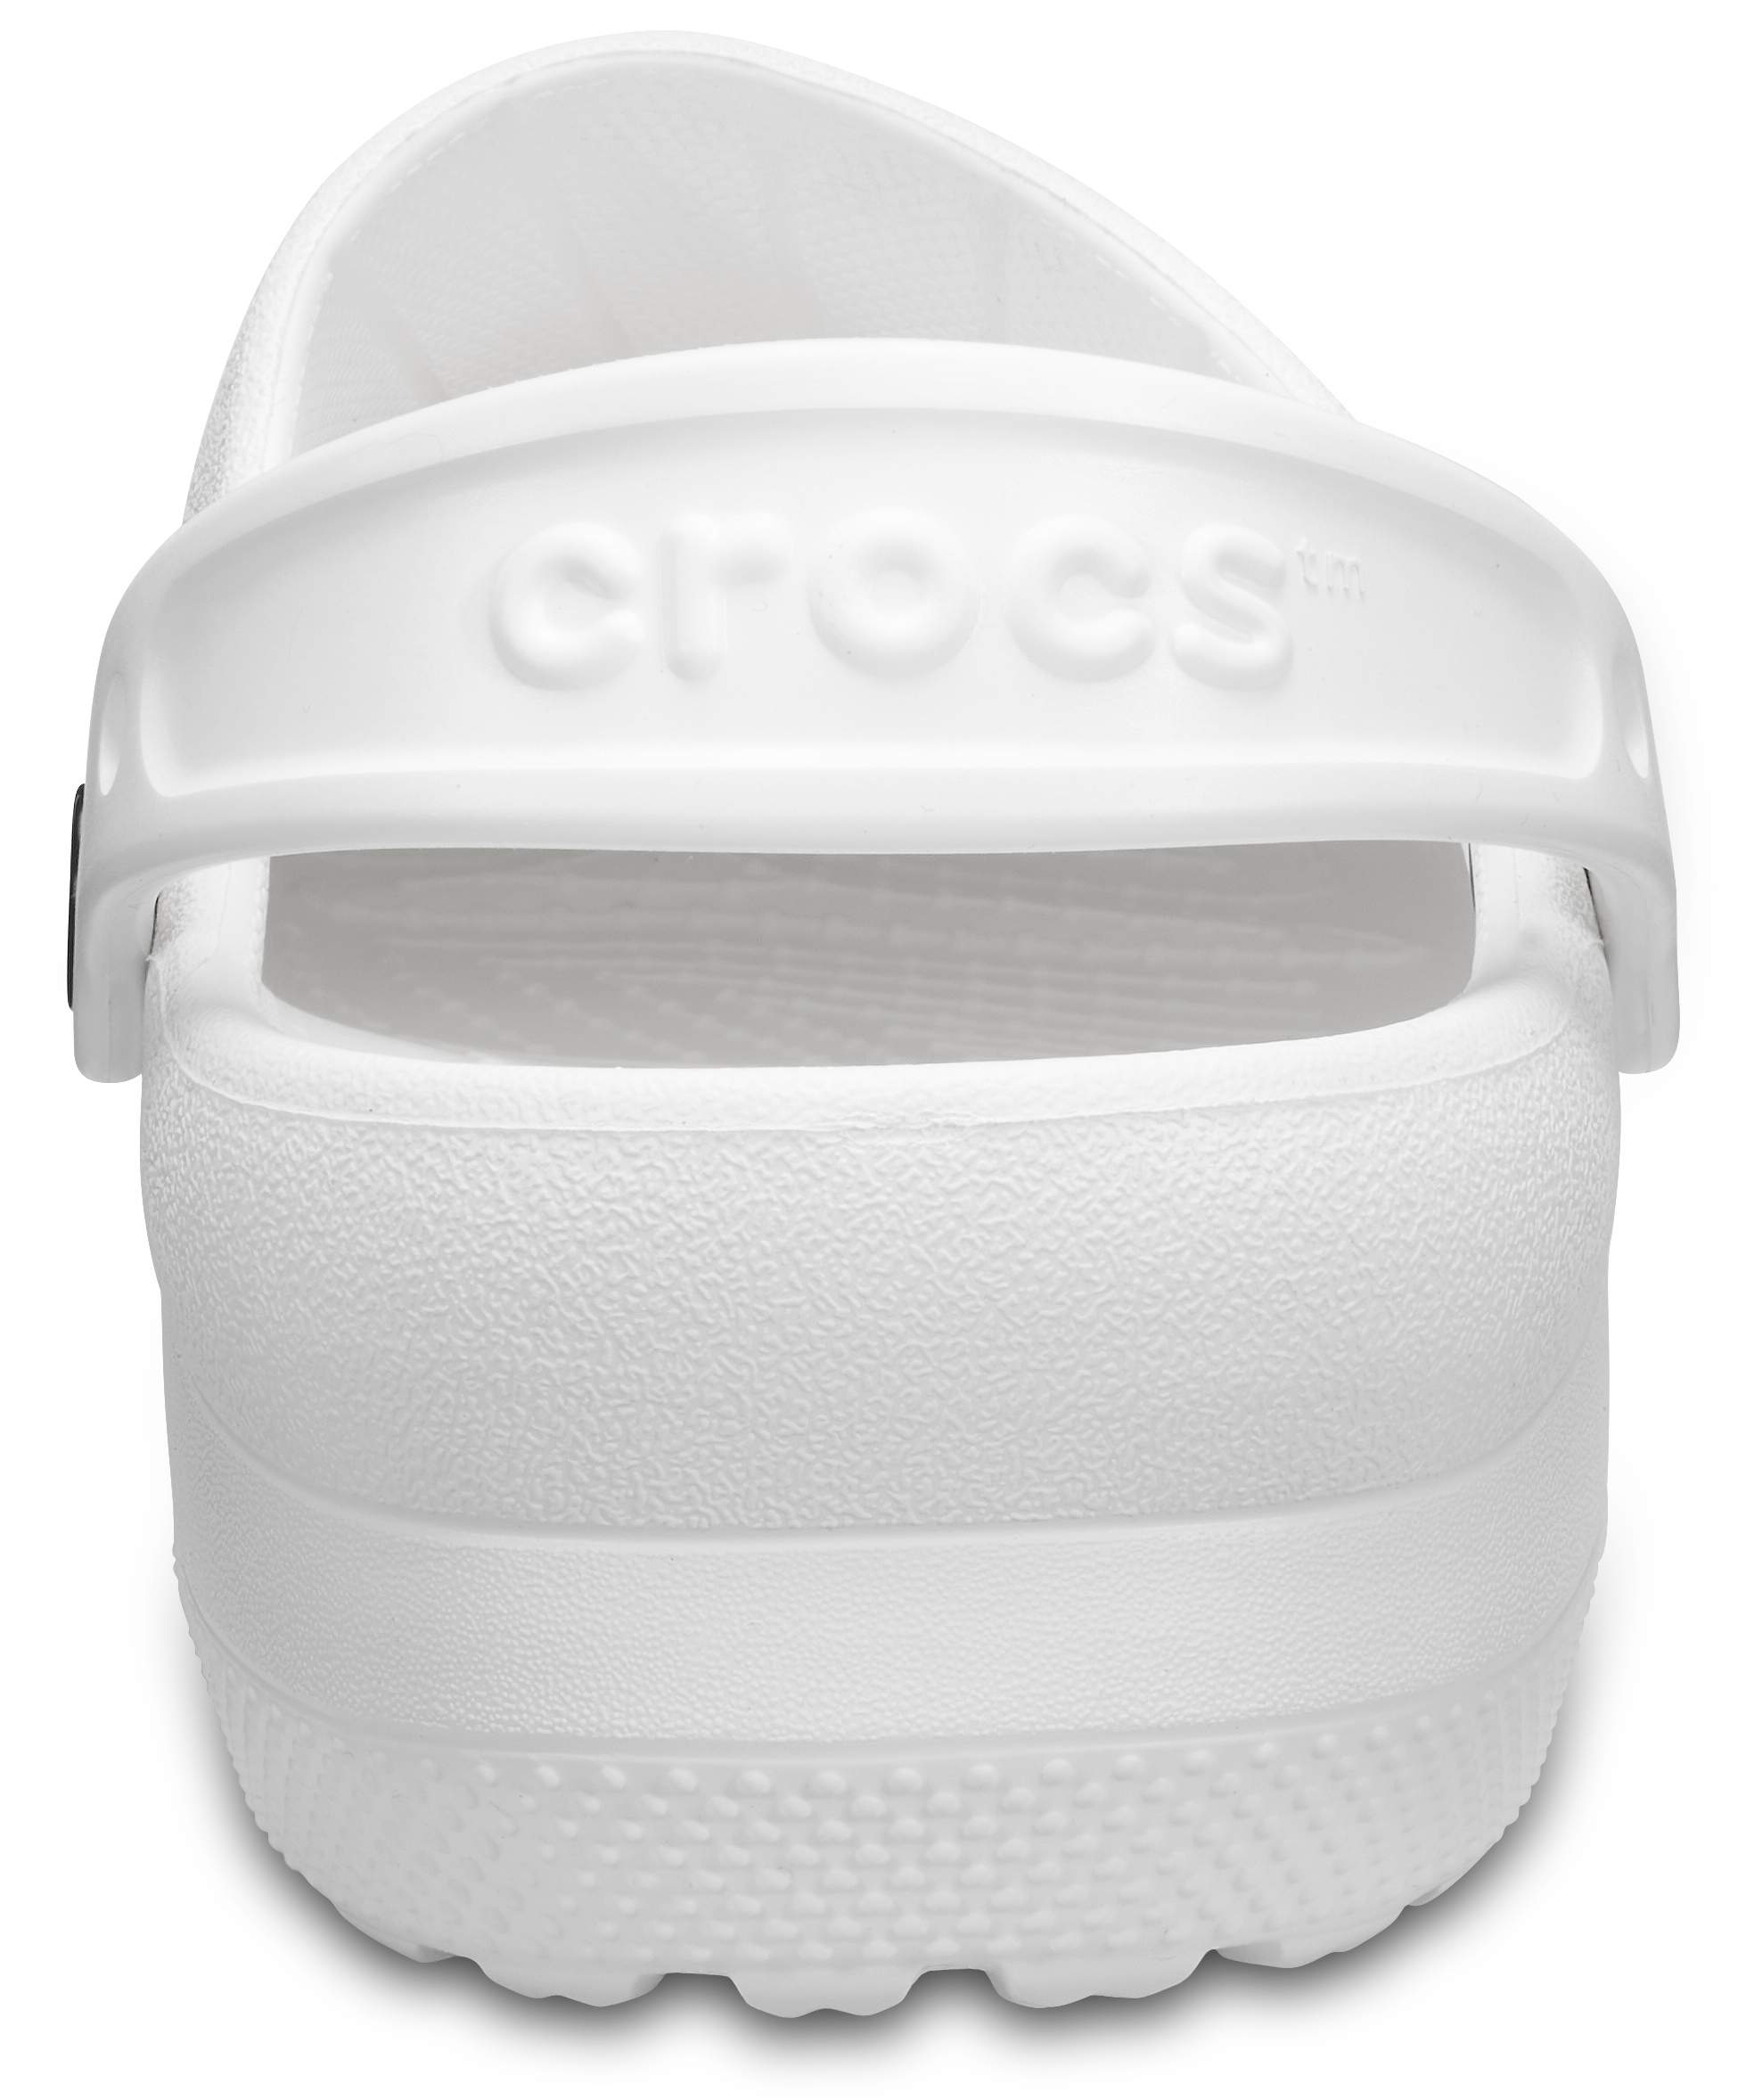 crocs 204590